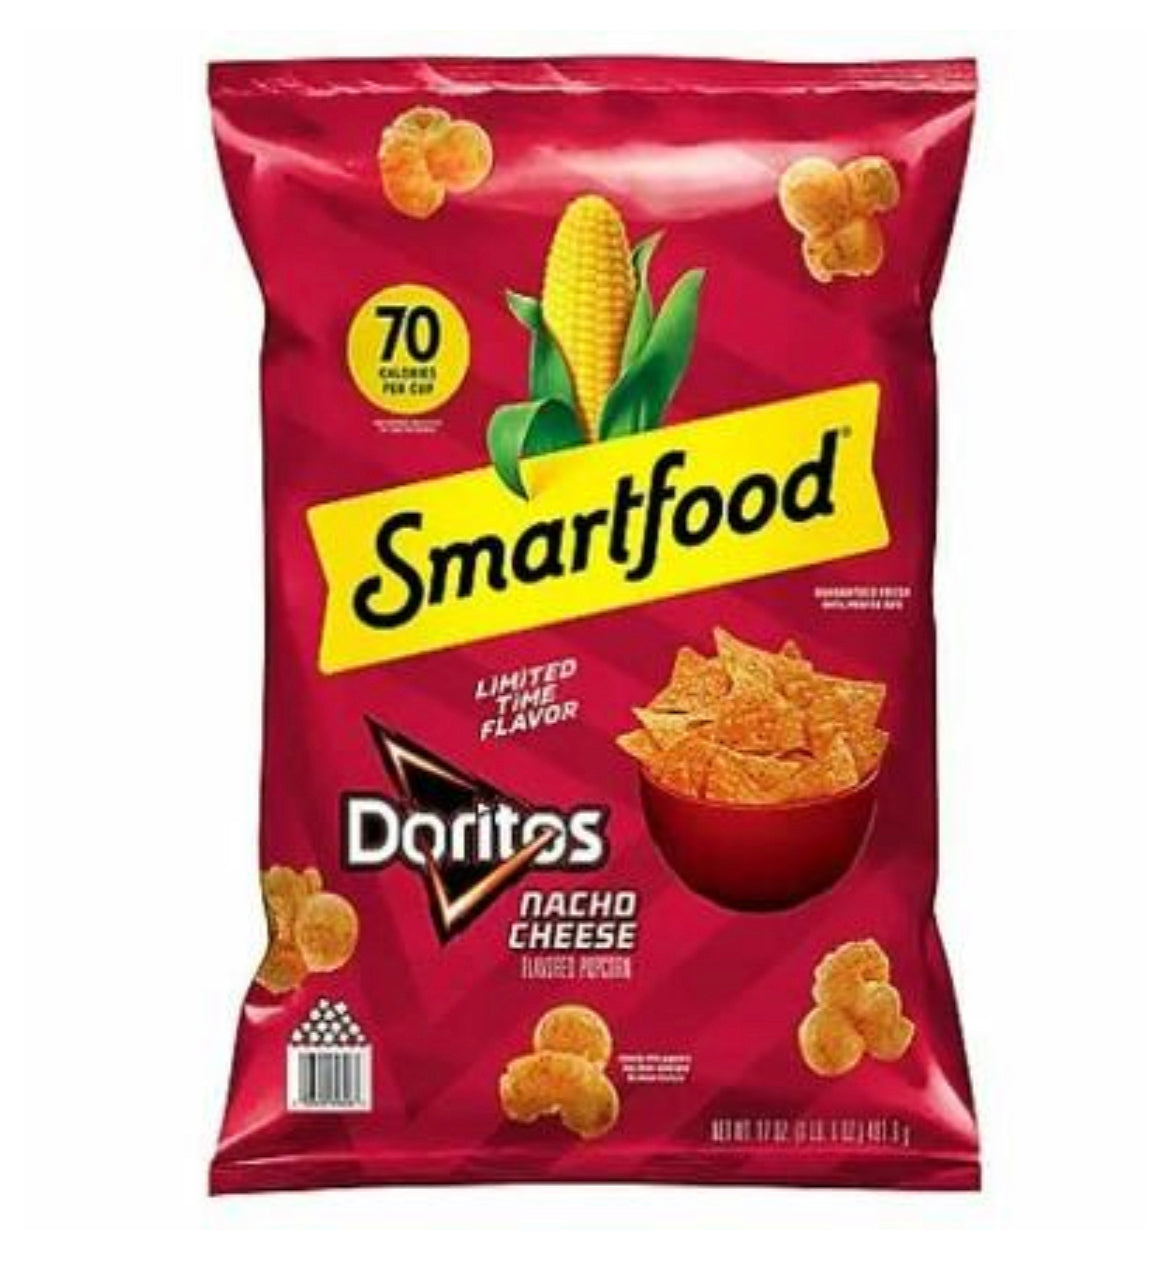 Smartfood Doritos Nacho Cheese flavored Popcorn